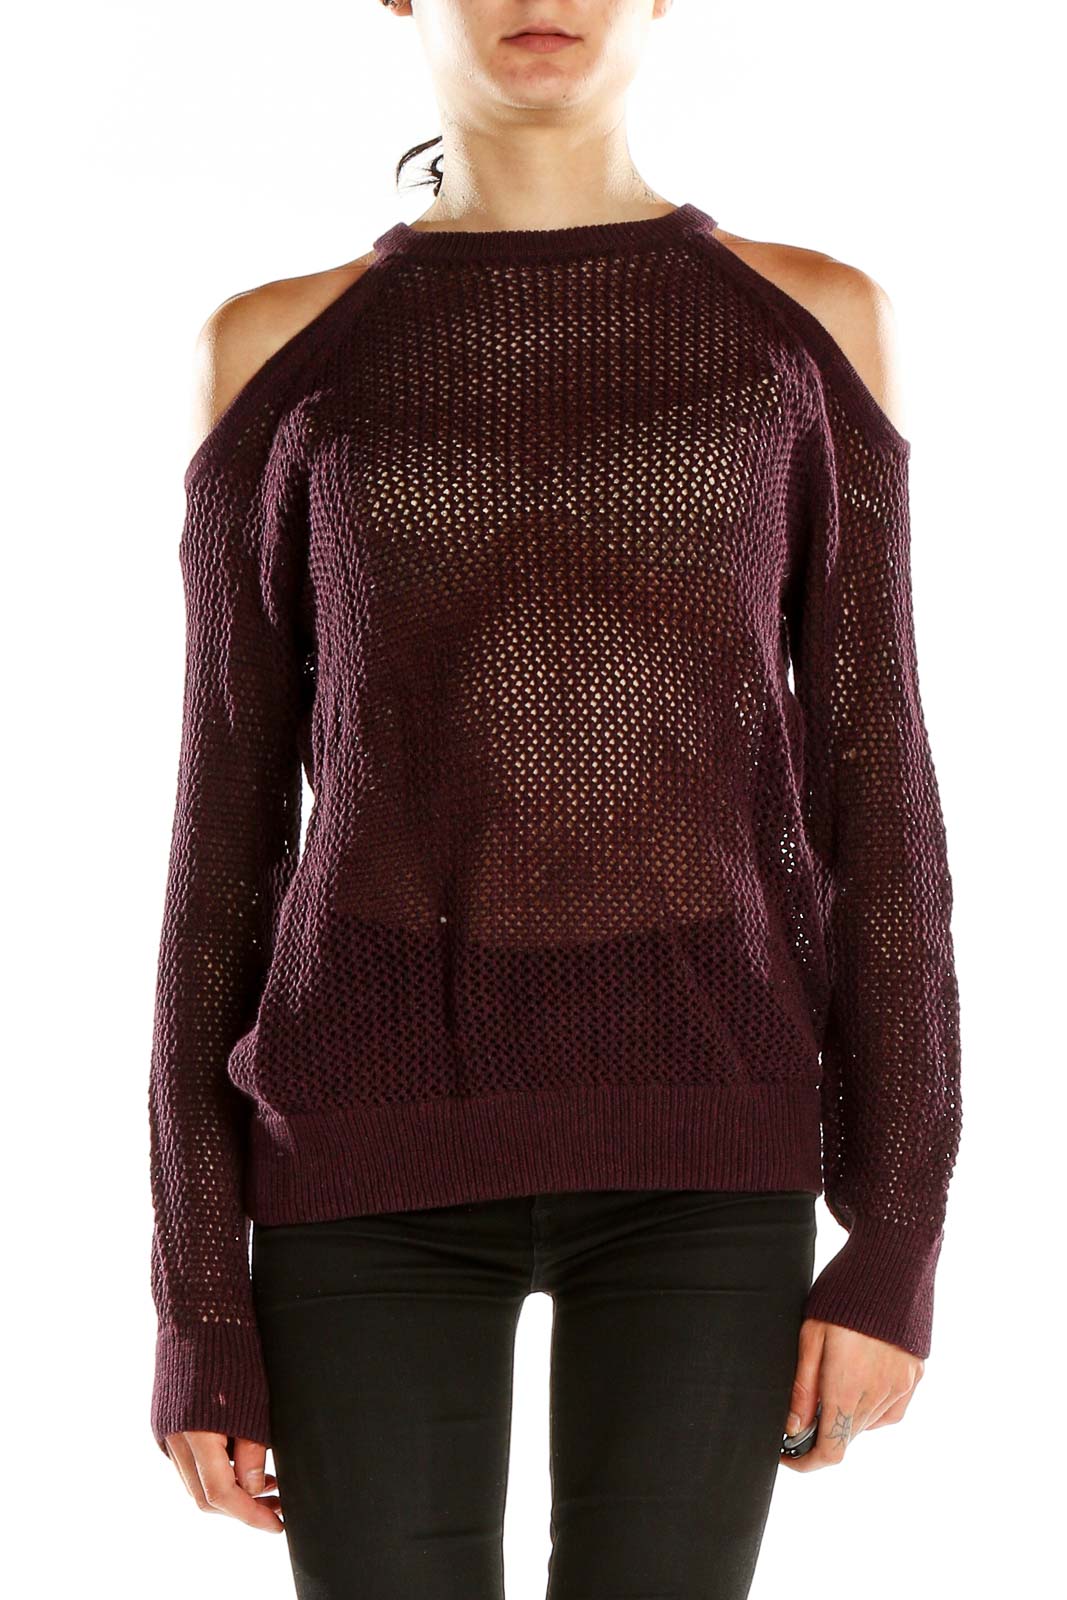 Purple Cold Shoulder Light Sweater Front